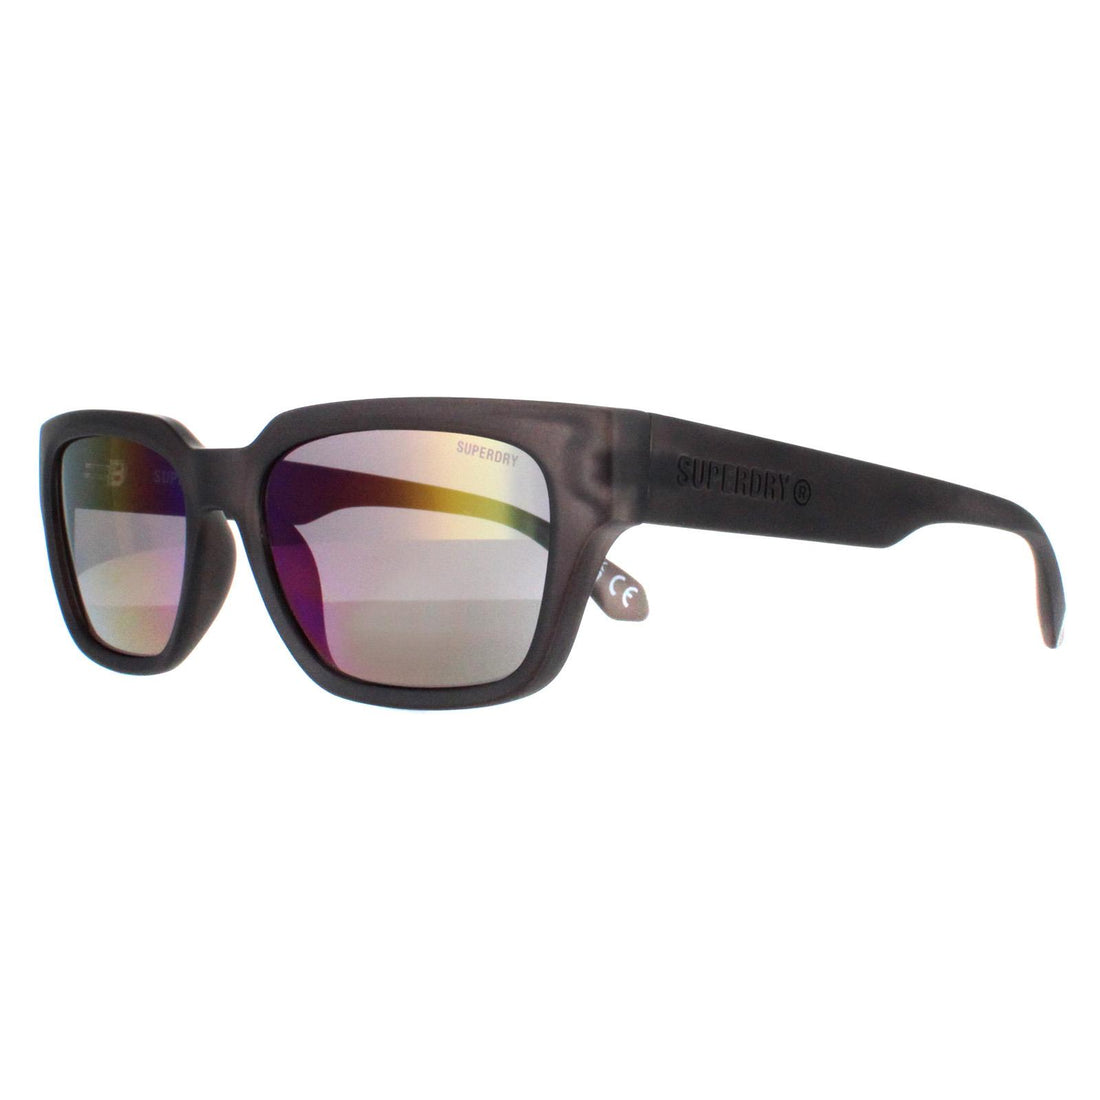 Superdry Sunglasses 5004 108 Black Purple Flash Mirror